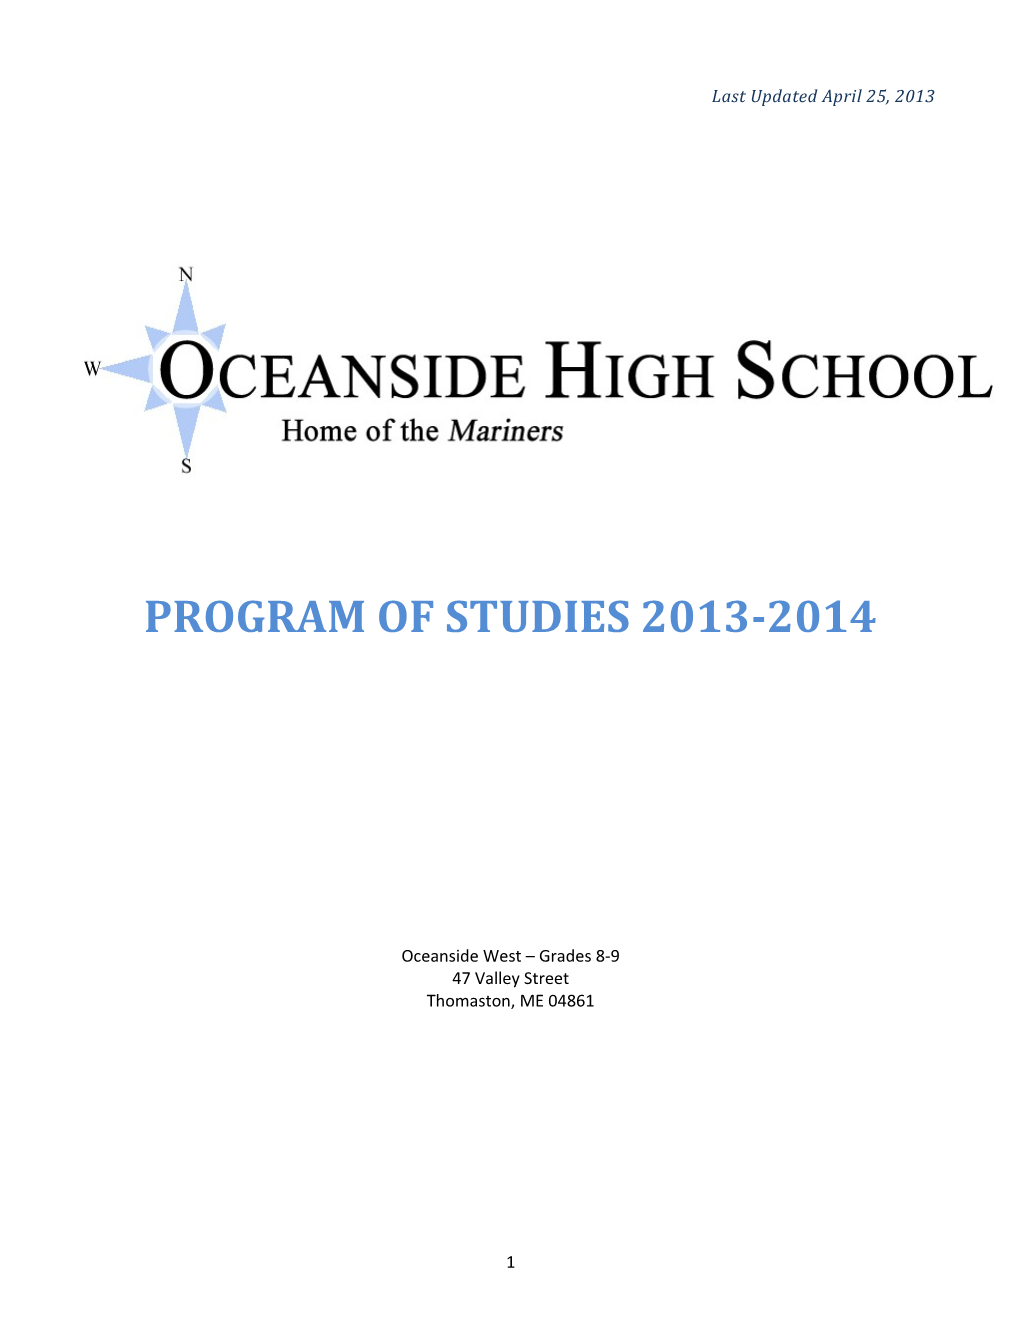 Program of Studies 2013-2014